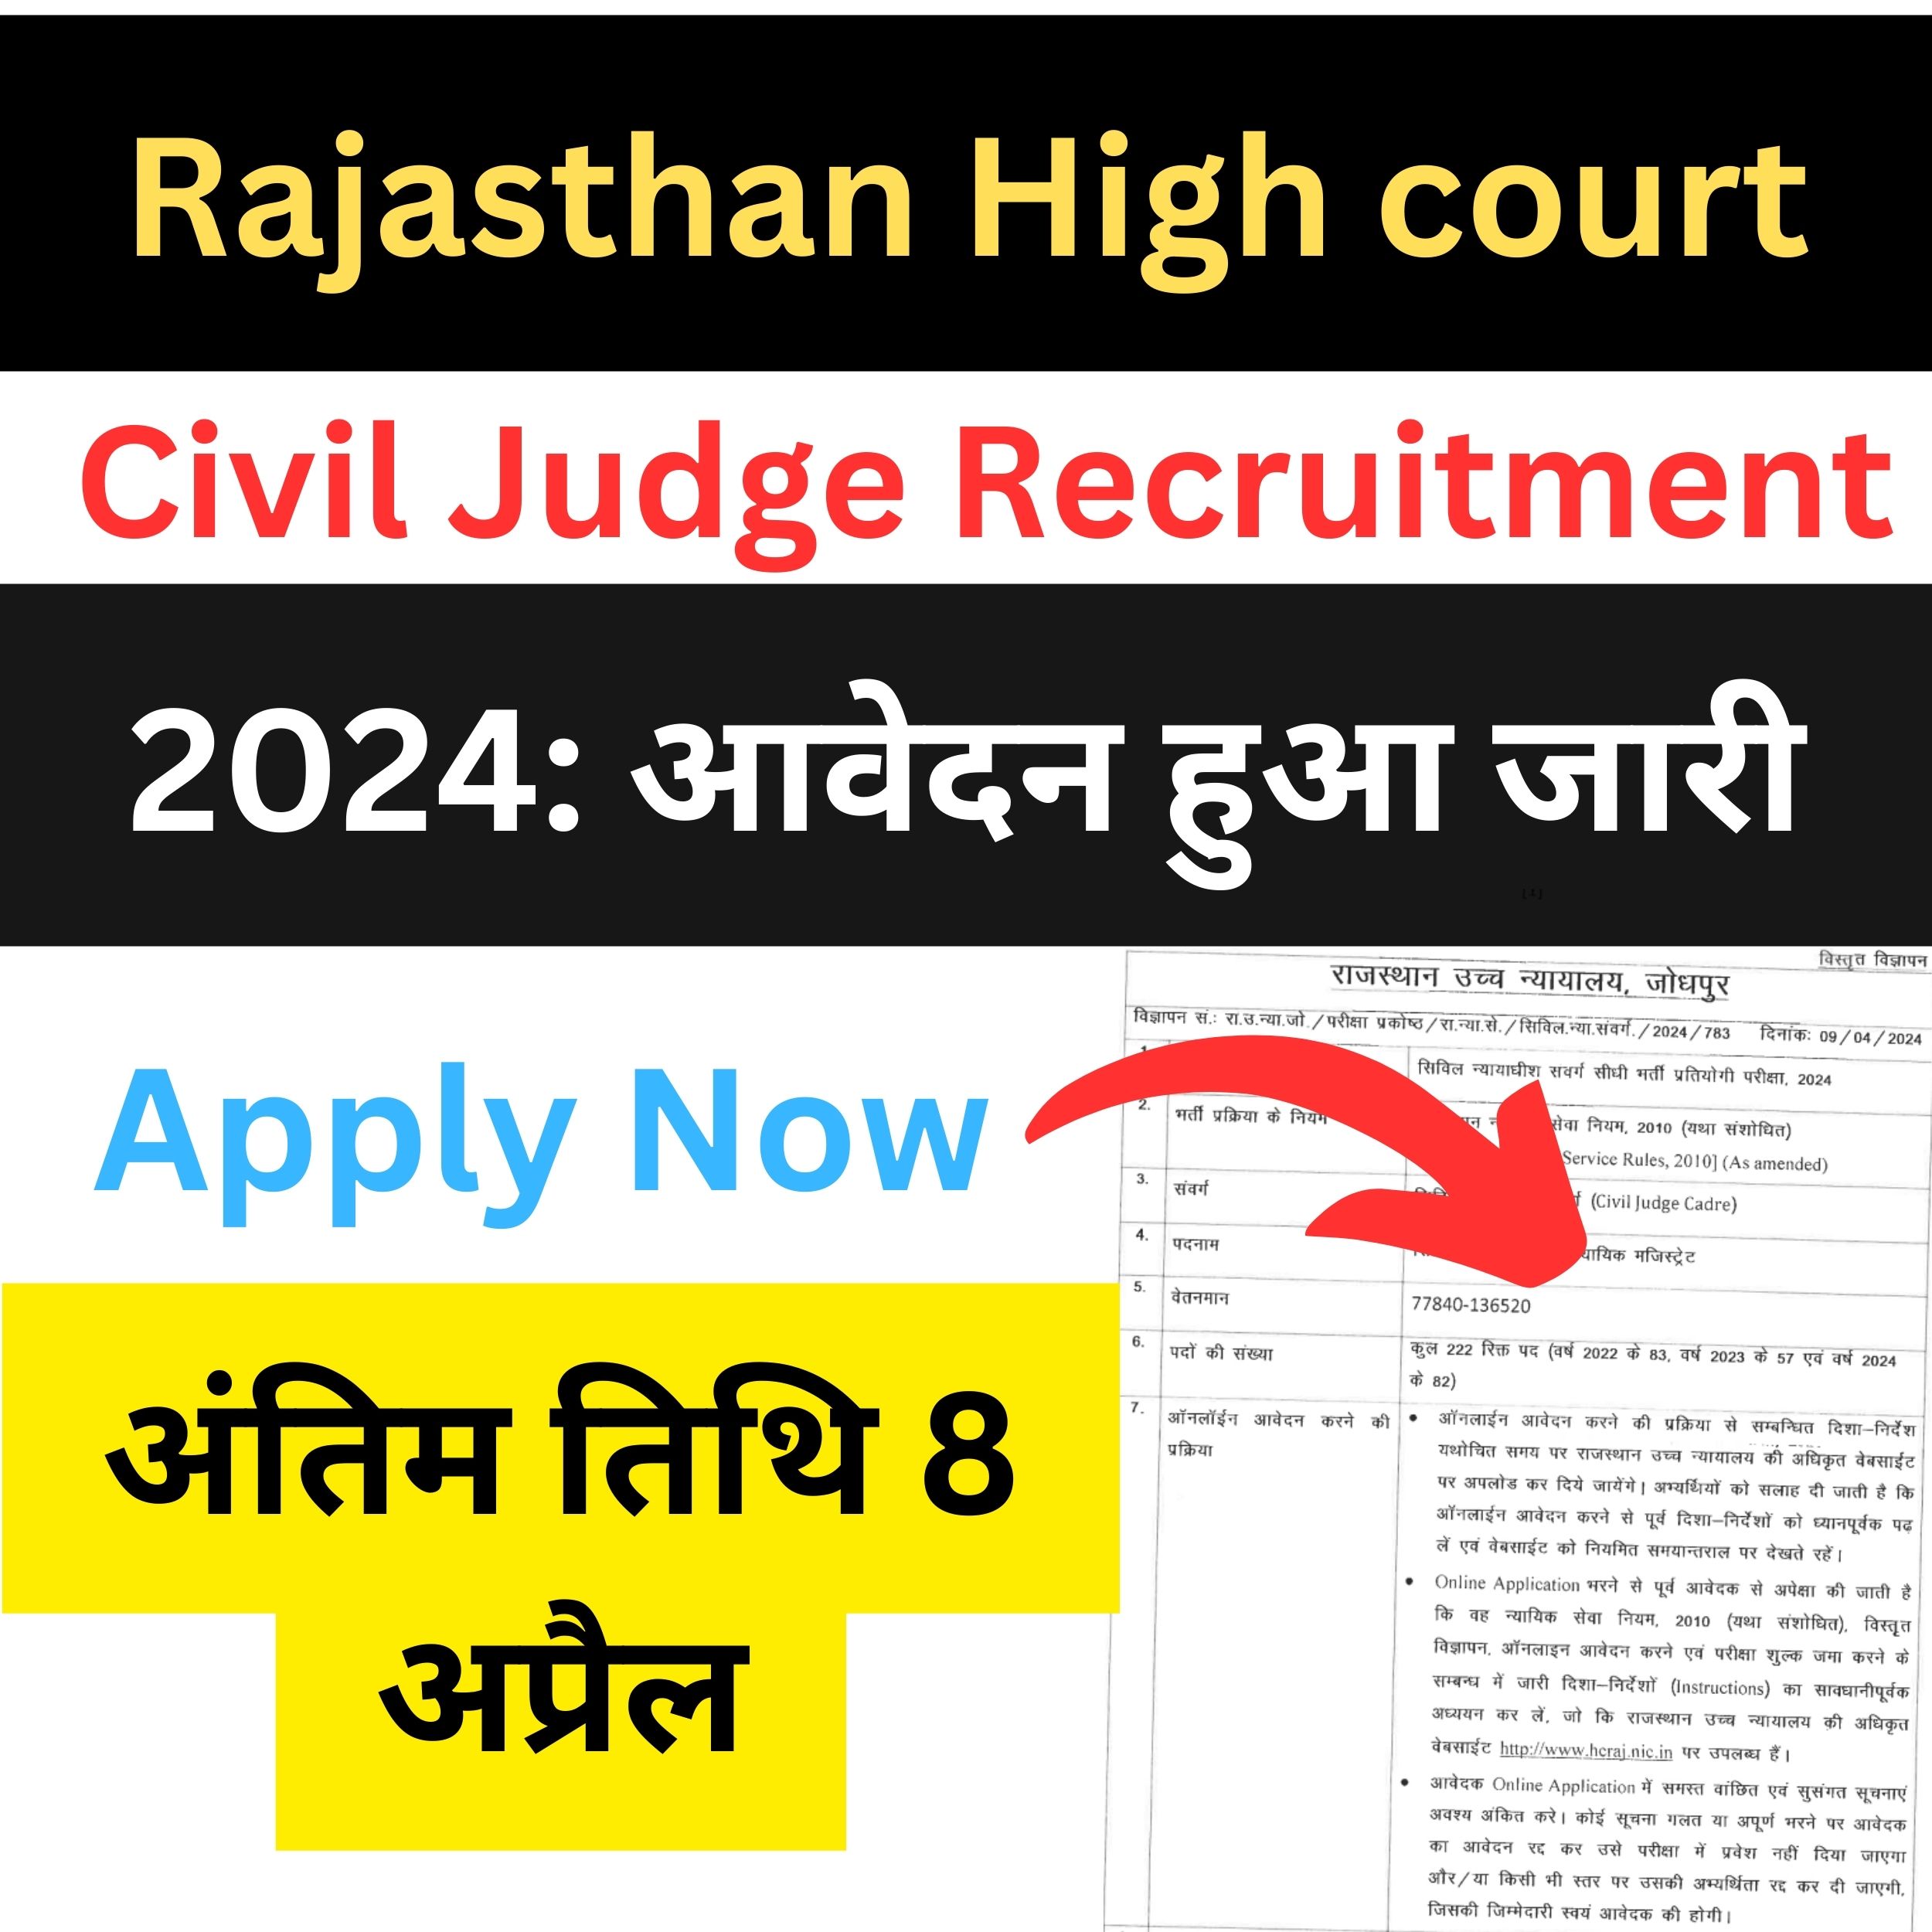 Rajasthan High court Civil Judge recruitment 2024